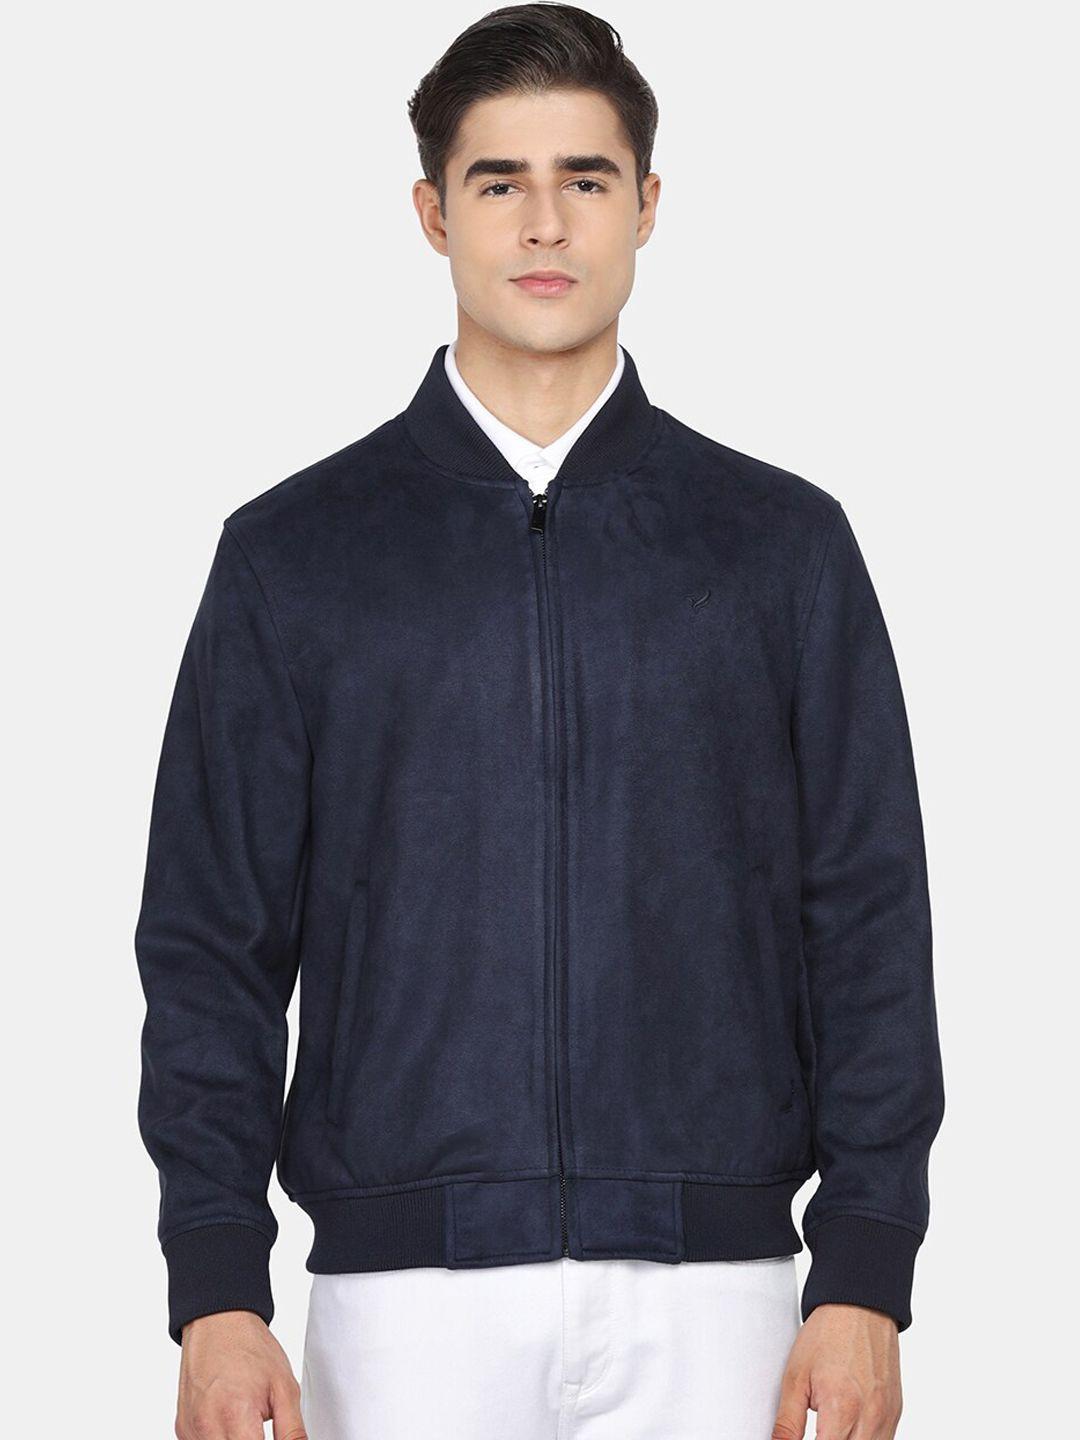 blackberrys-men-navy-blue-solid-long-sleeves-bomber-jacket